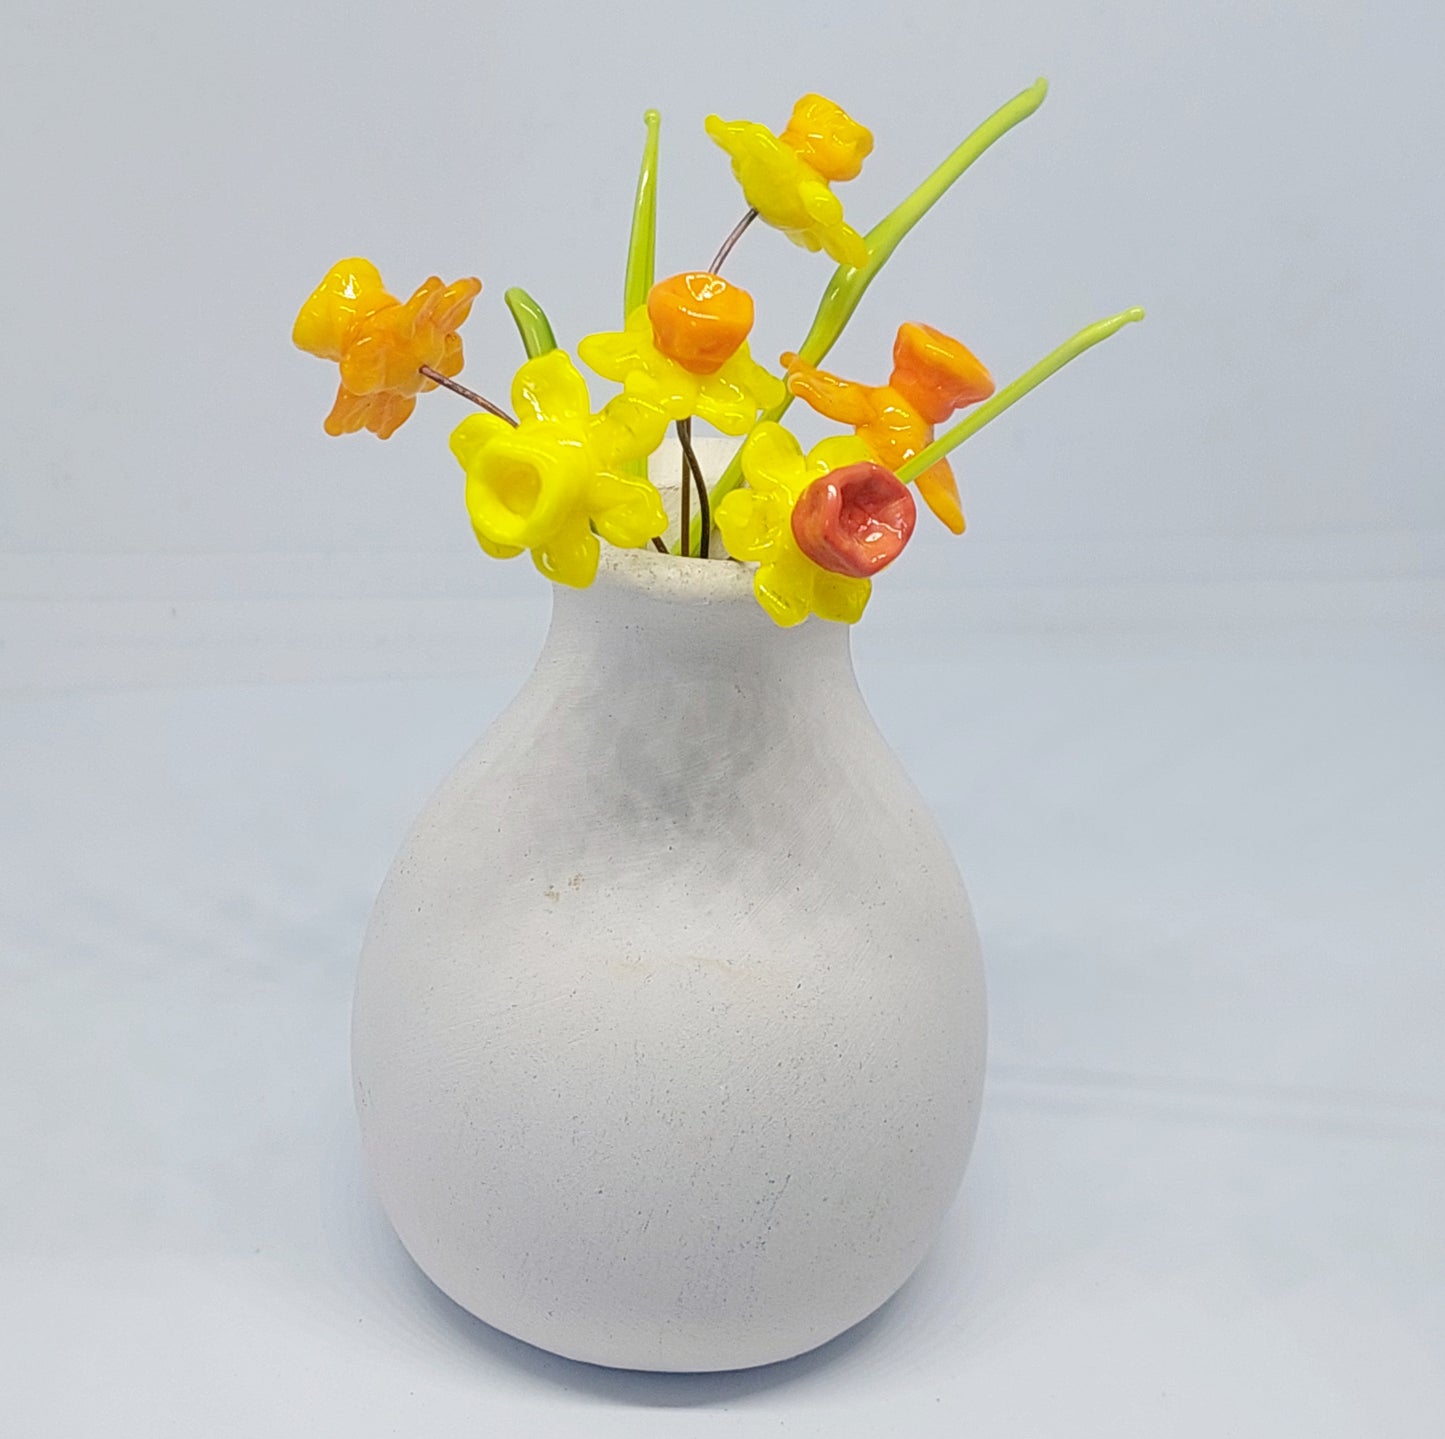 BESTSELLER! NEW!! Glass Art - Large Sunny Midi Daffodil Bouquet